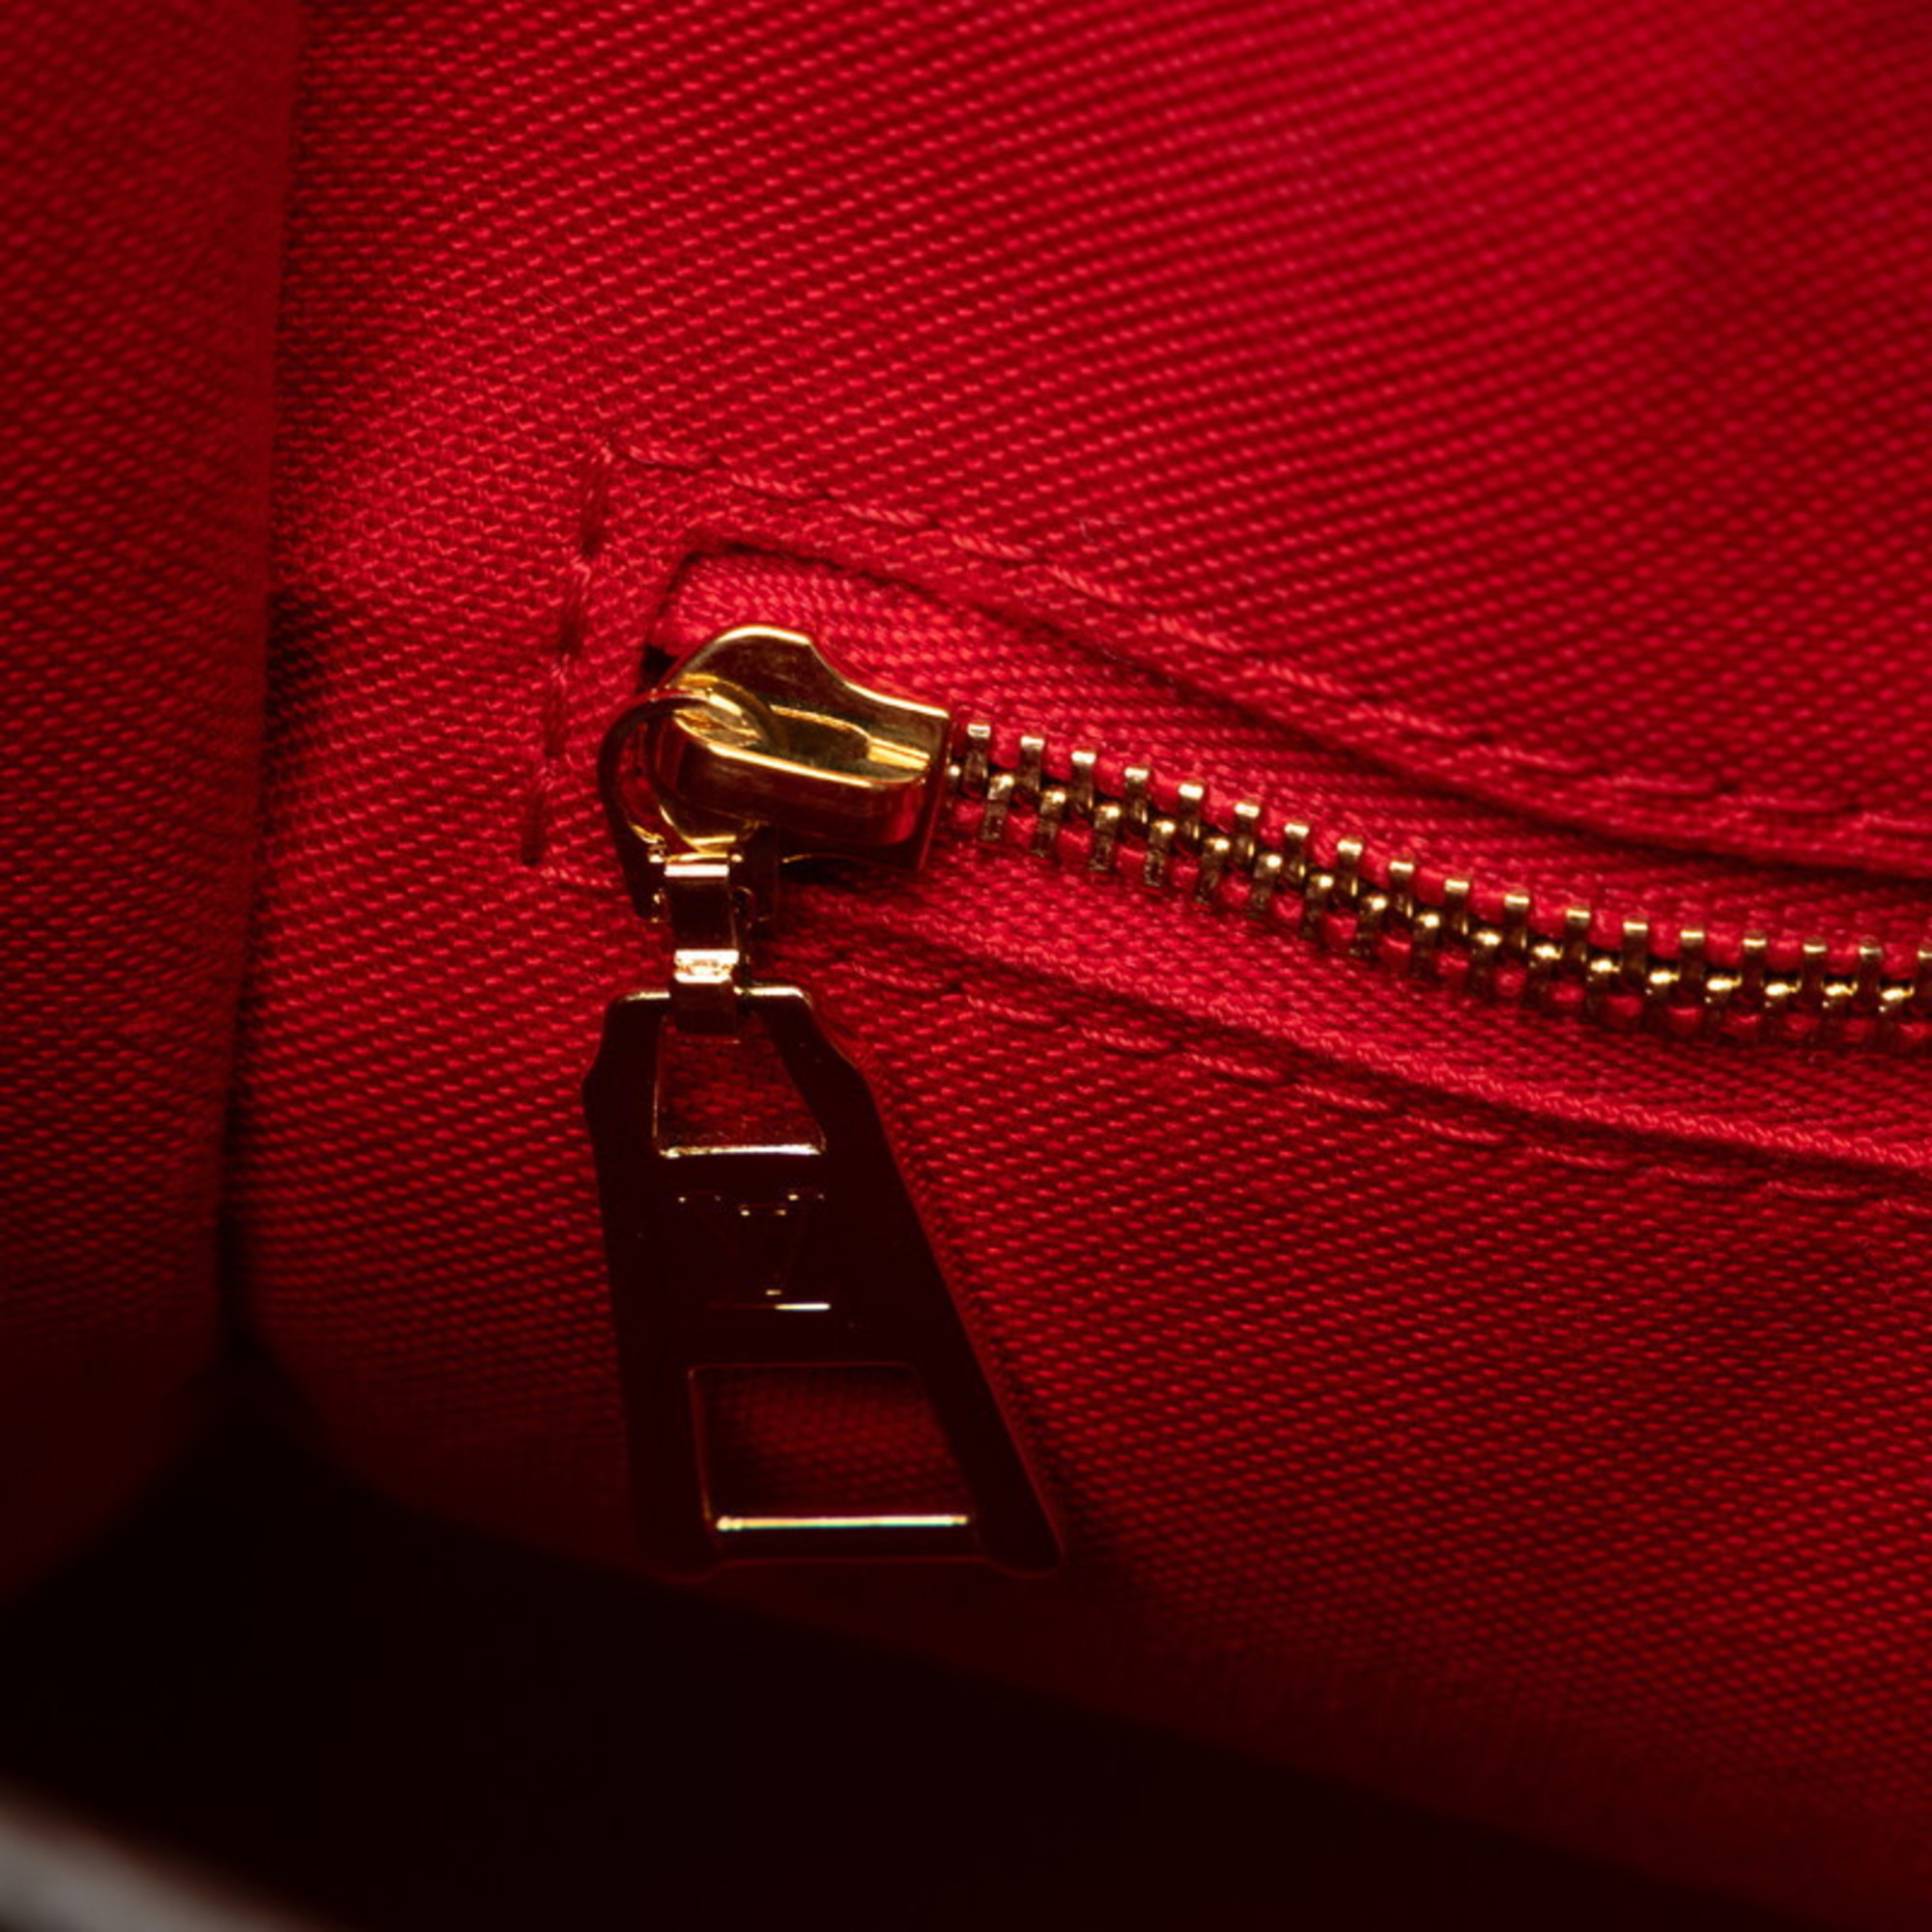 Louis Vuitton Monogram Sac Plat BB Handbag Shoulder Bag M45847 Brown PVC Leather Women's LOUIS VUITTON